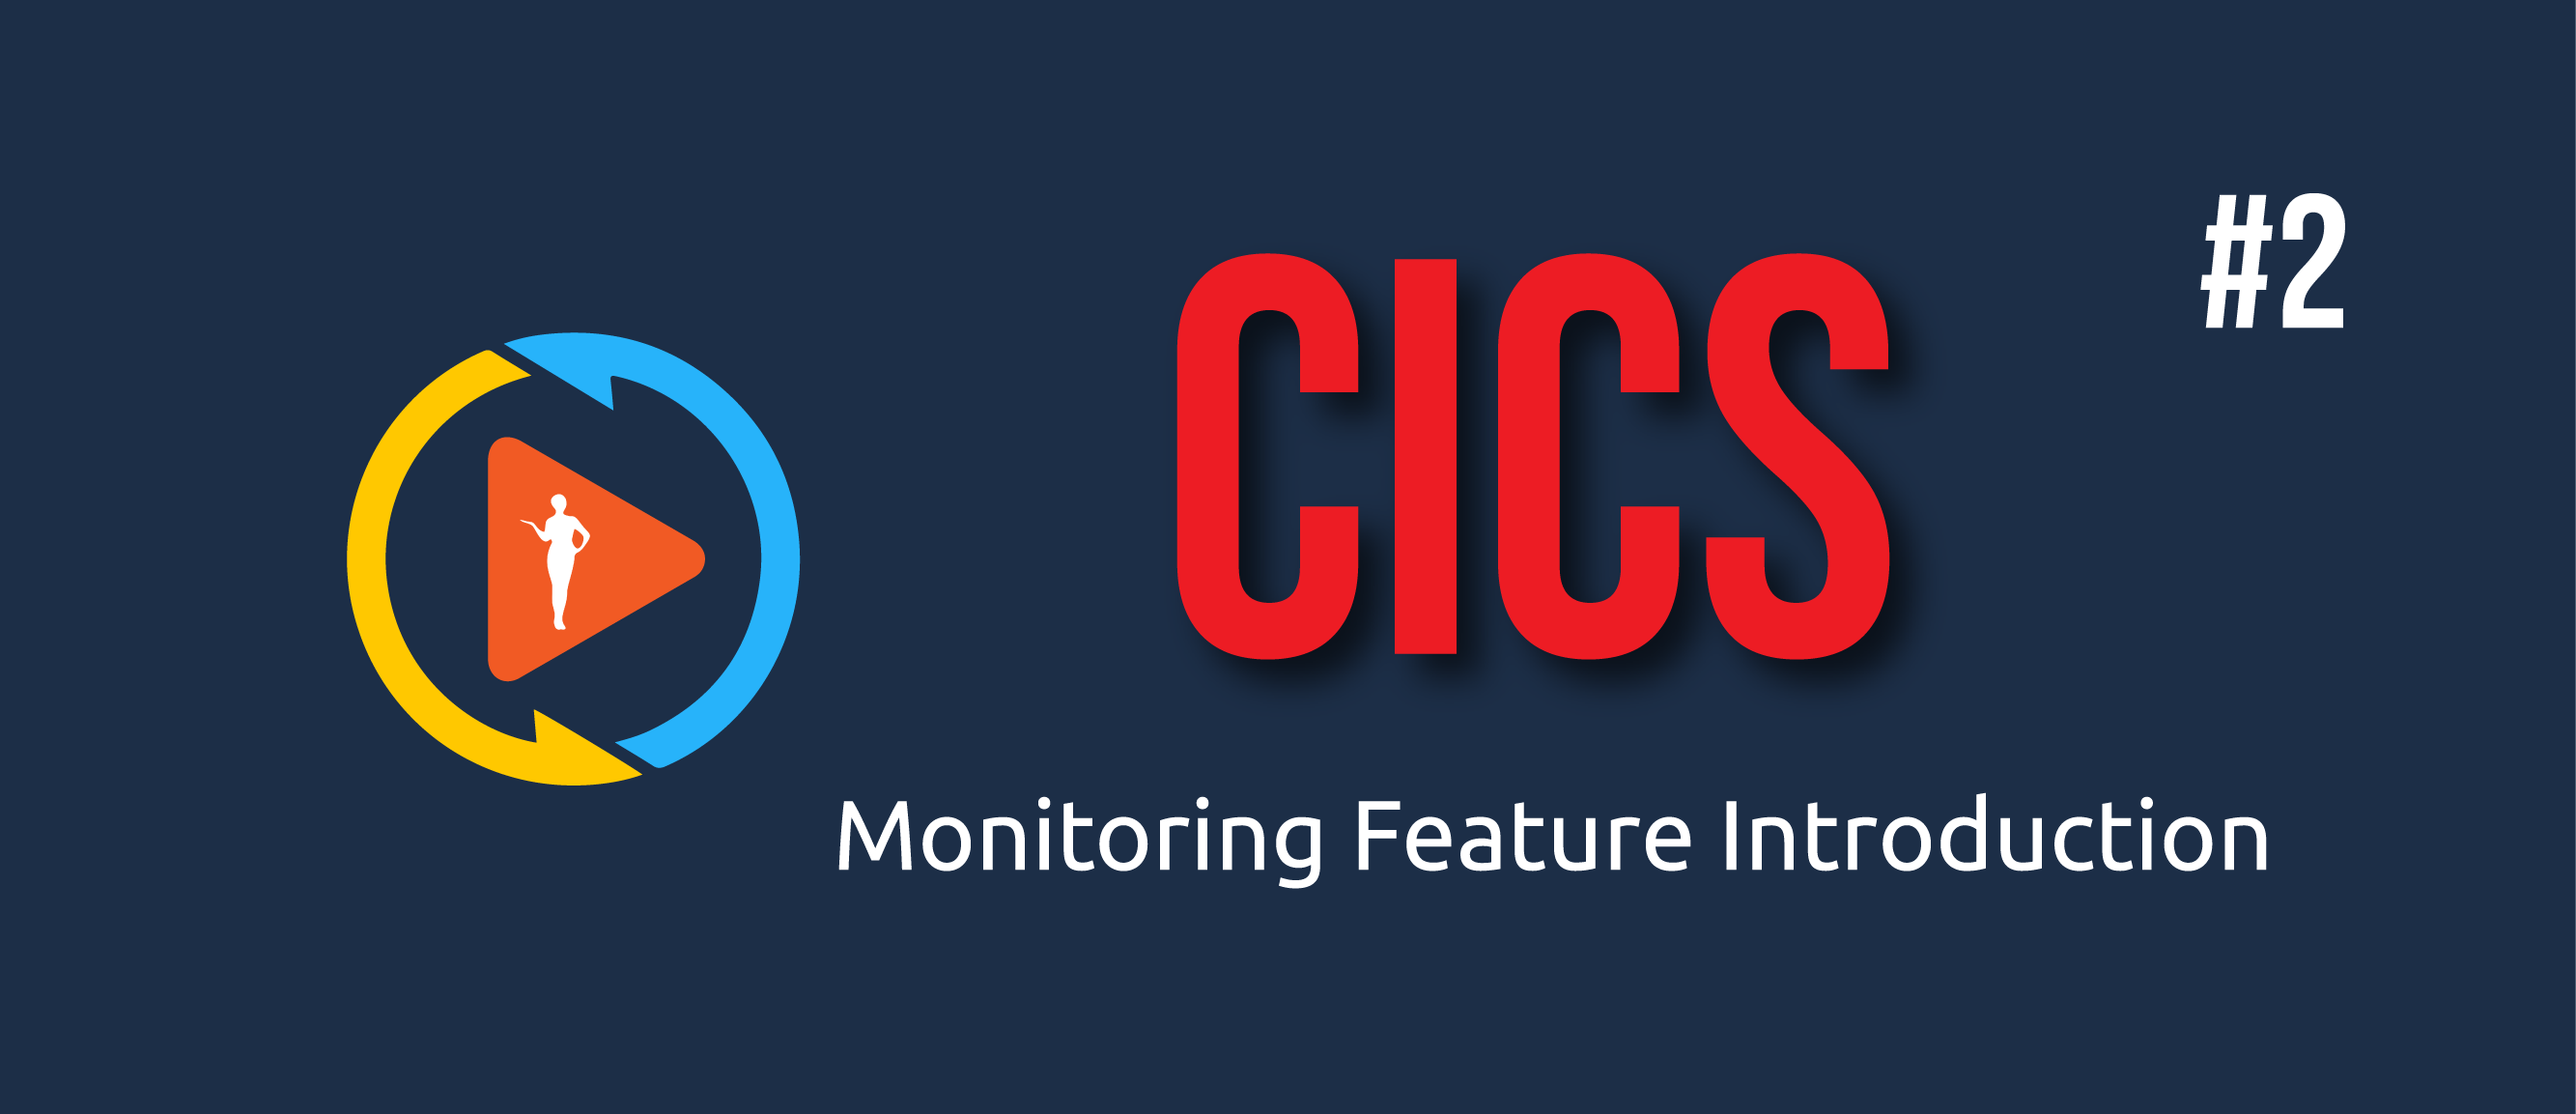 Video 19- CICS Monitoring Feature Introduction APM Jennifer - 2 